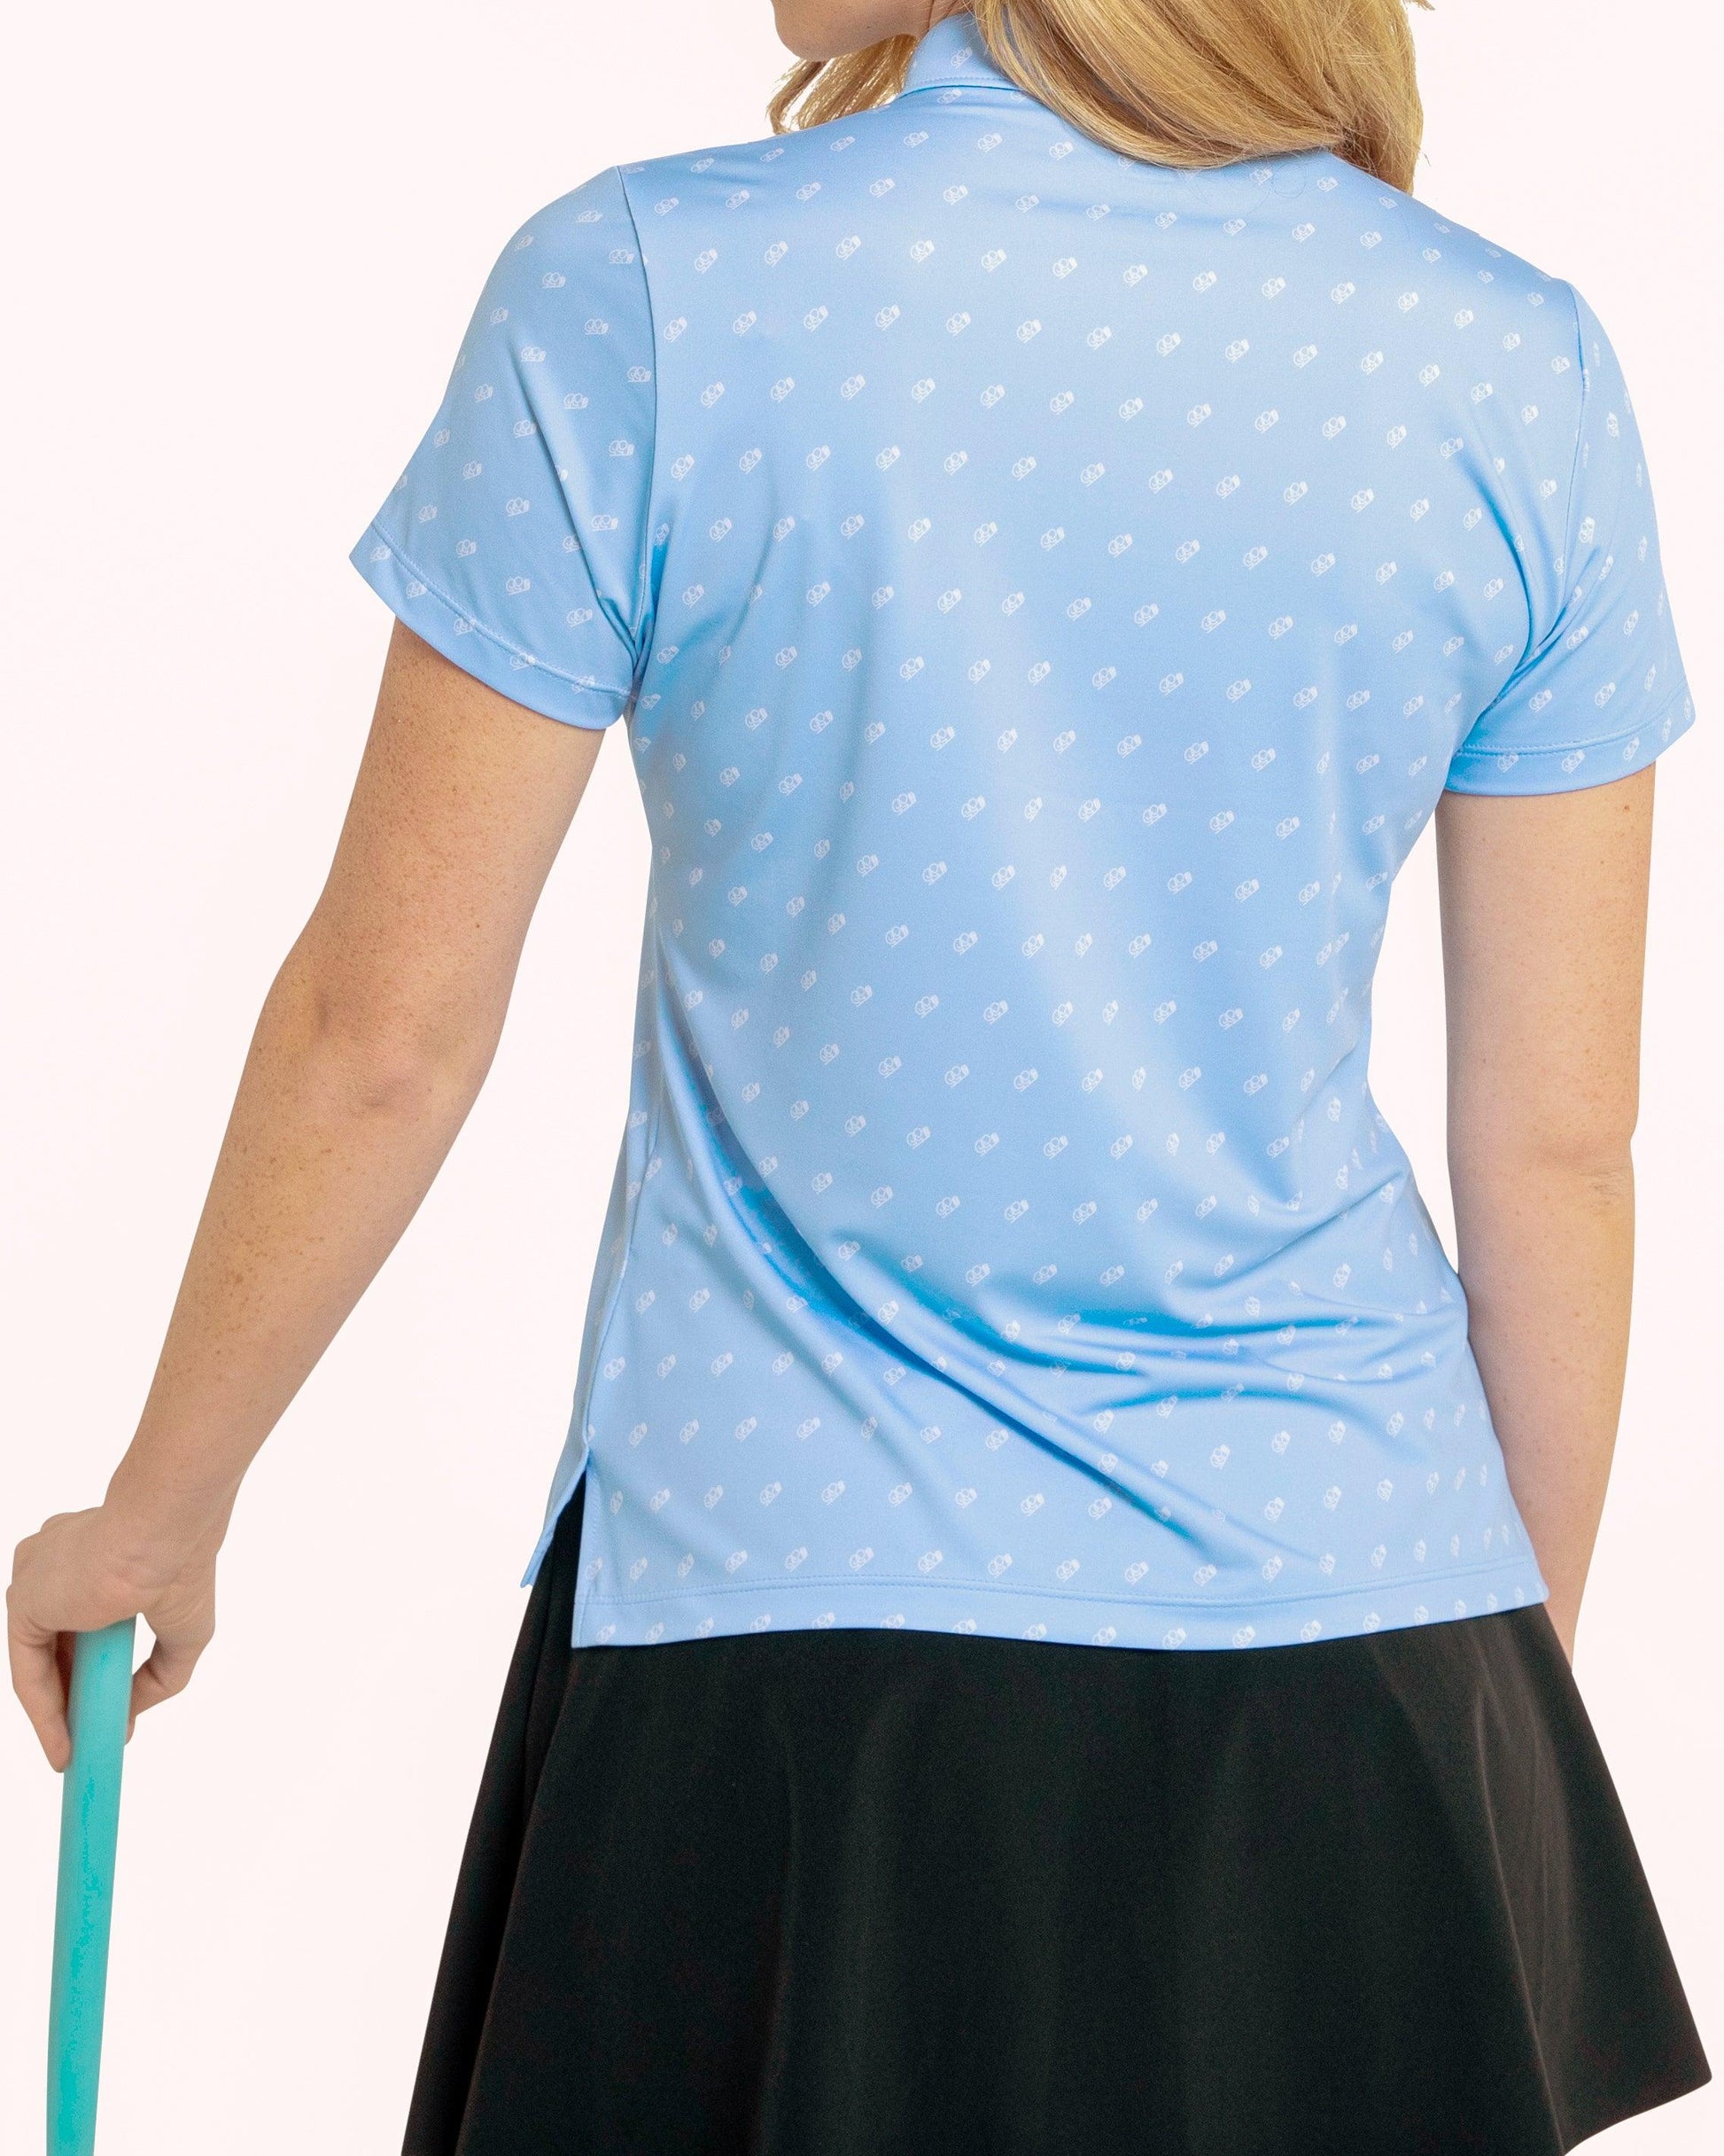 Callaway Women's Polka Dot Polo Shirt